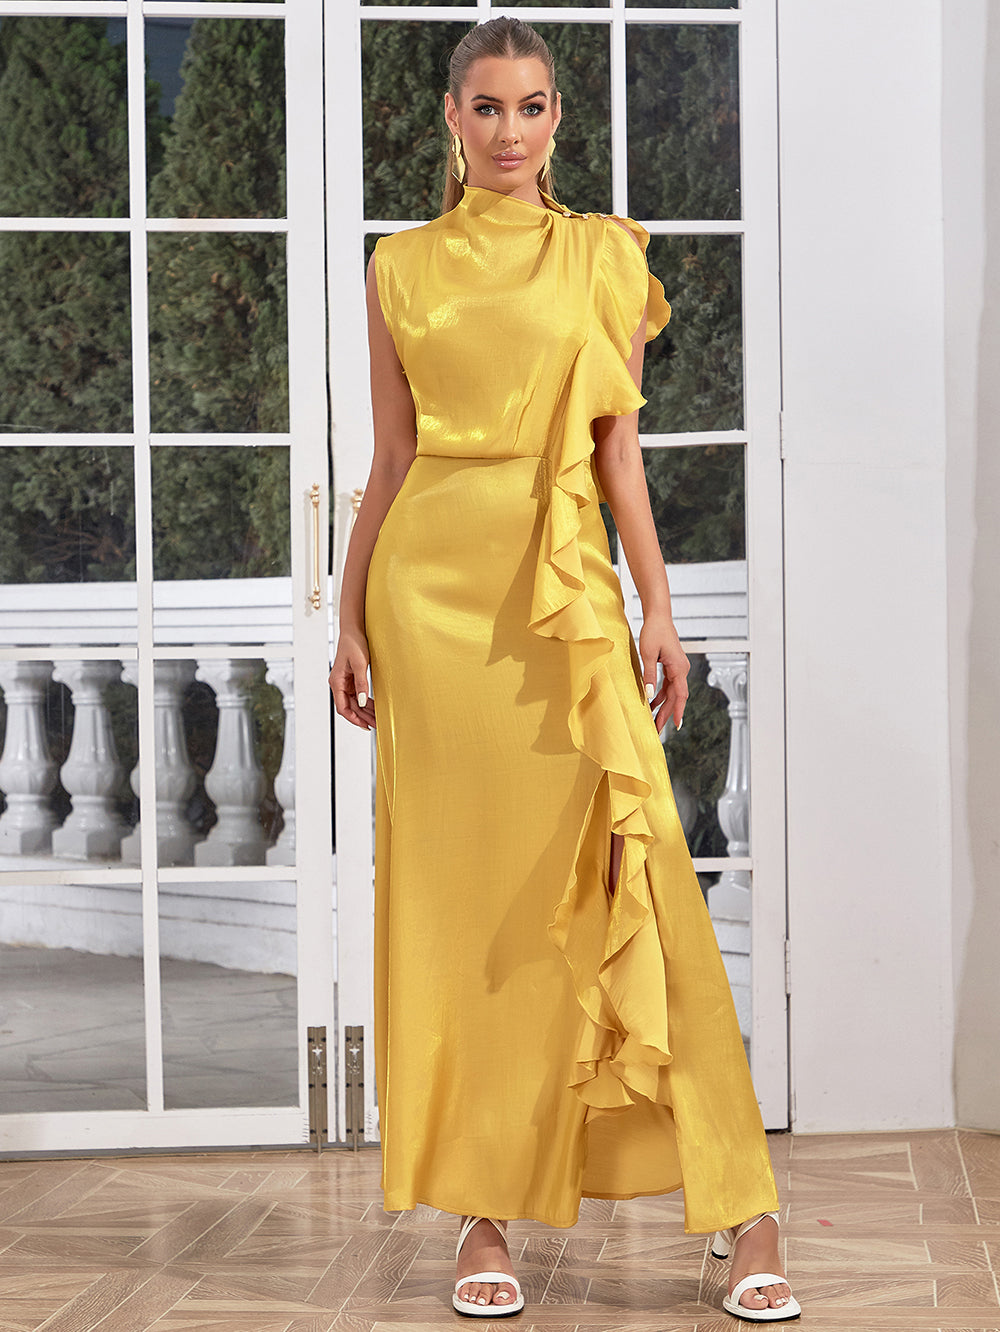 Yellow Bodycon Dress HB0255